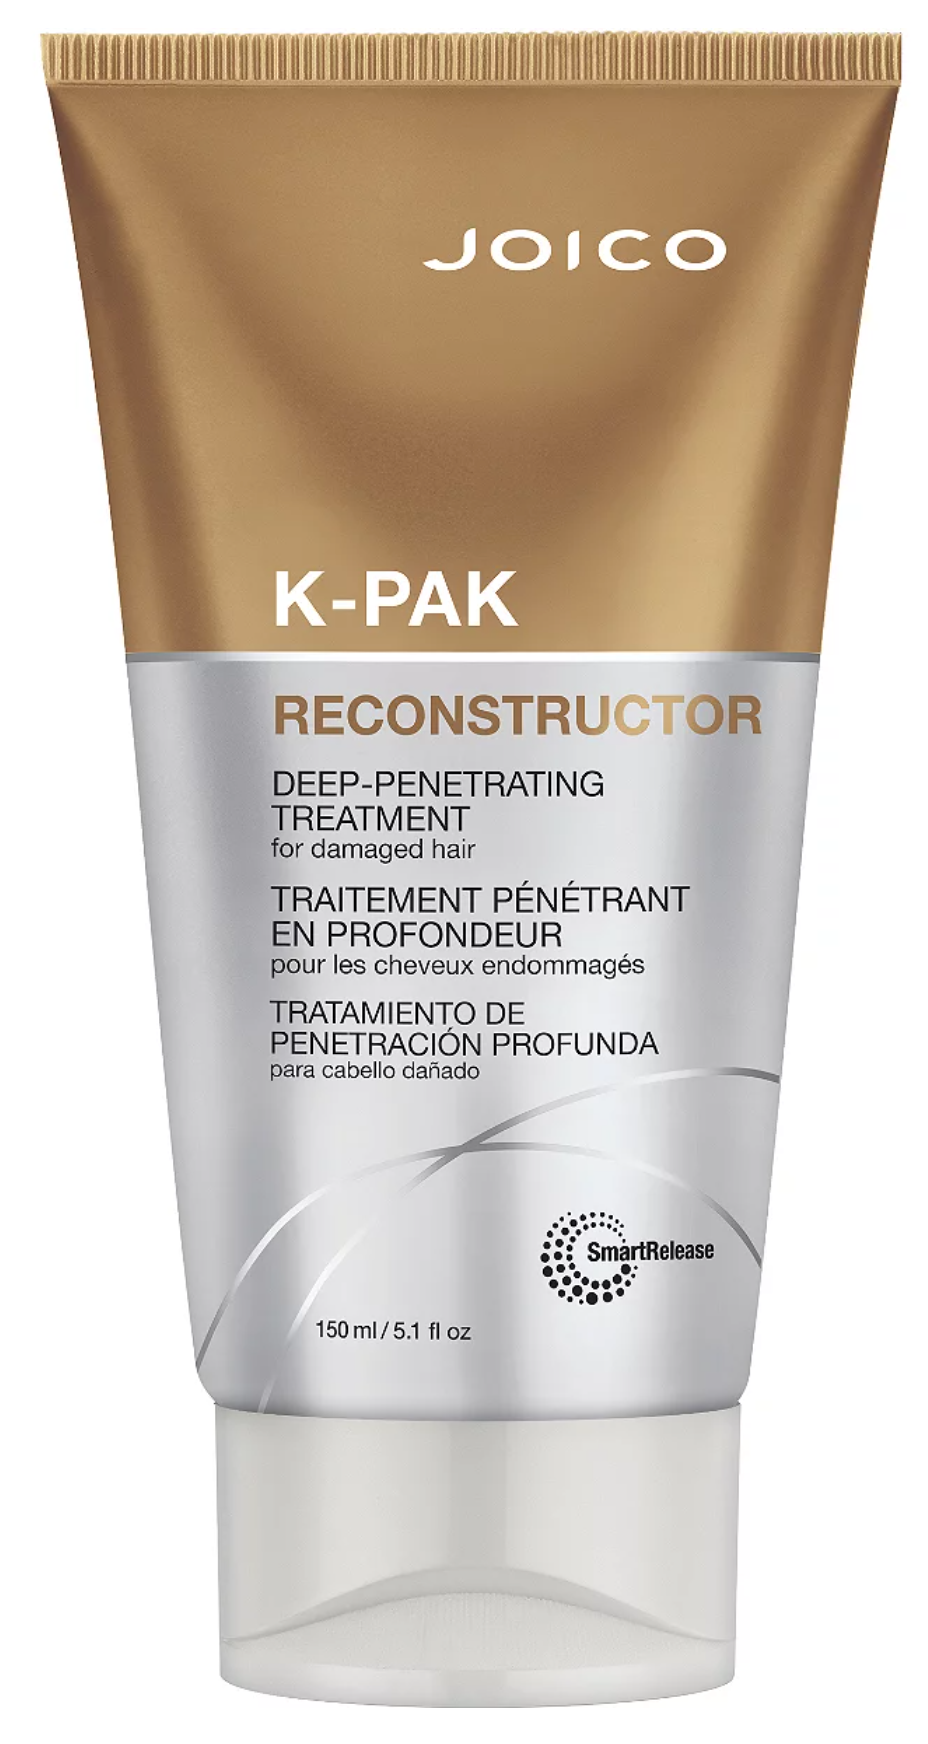 Joico KPak Reconstructor Treatment